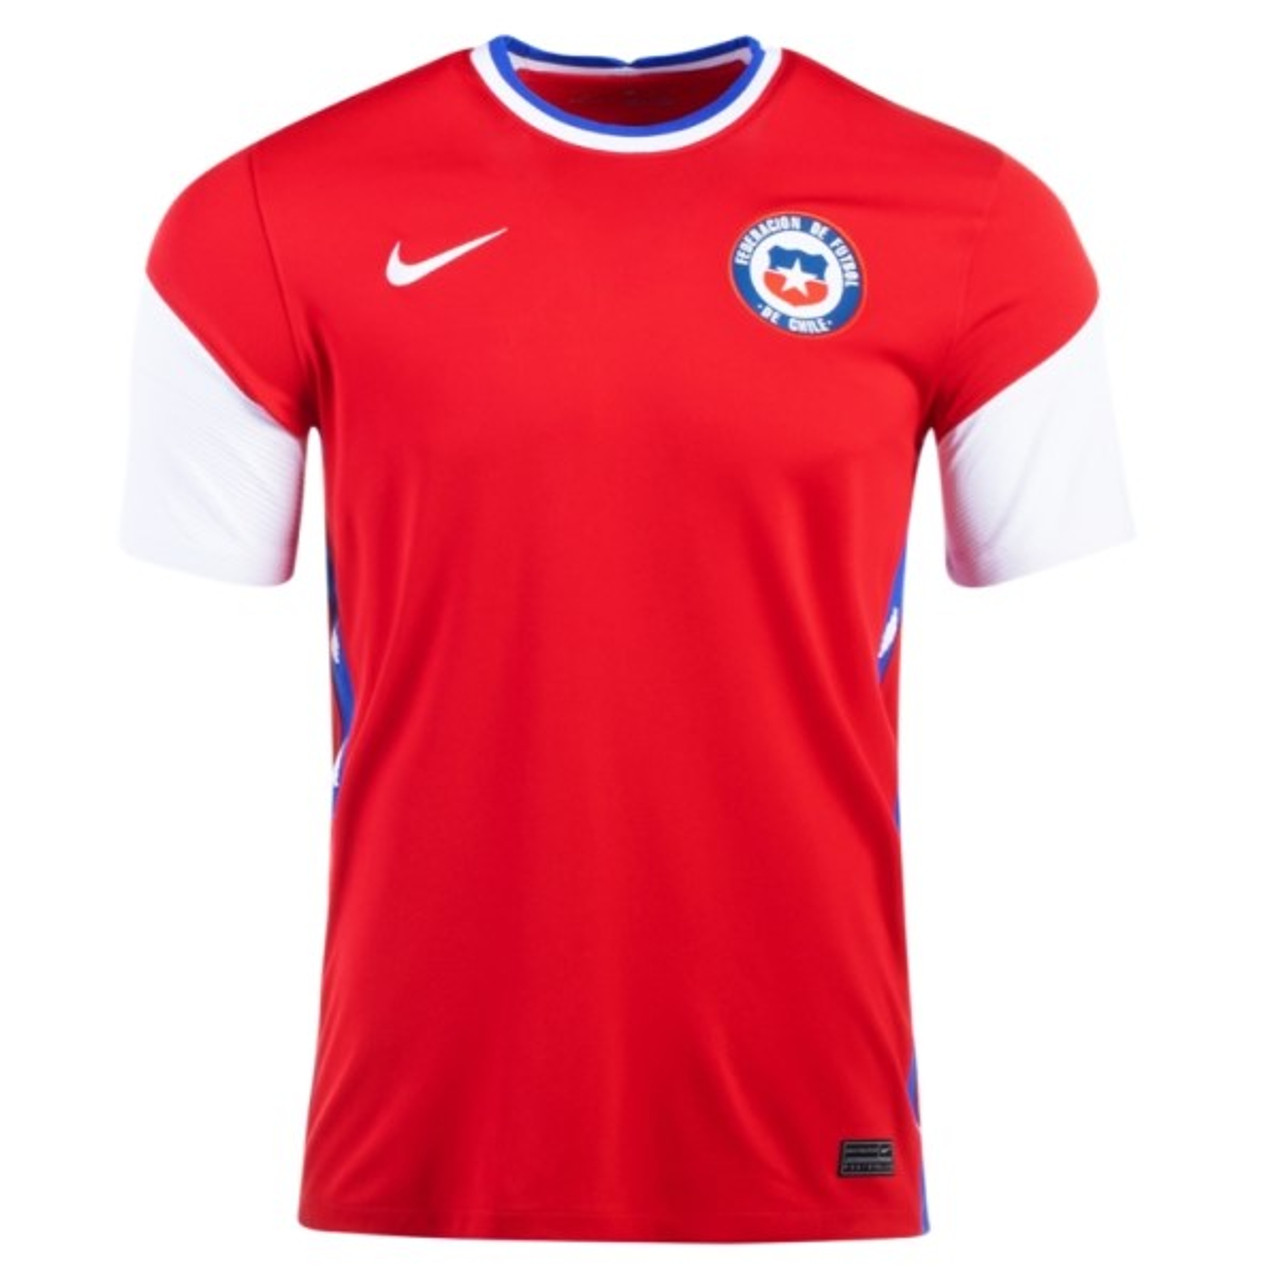 China National Team Nike 2020/21 Home Stadium Replica Jersey - Red